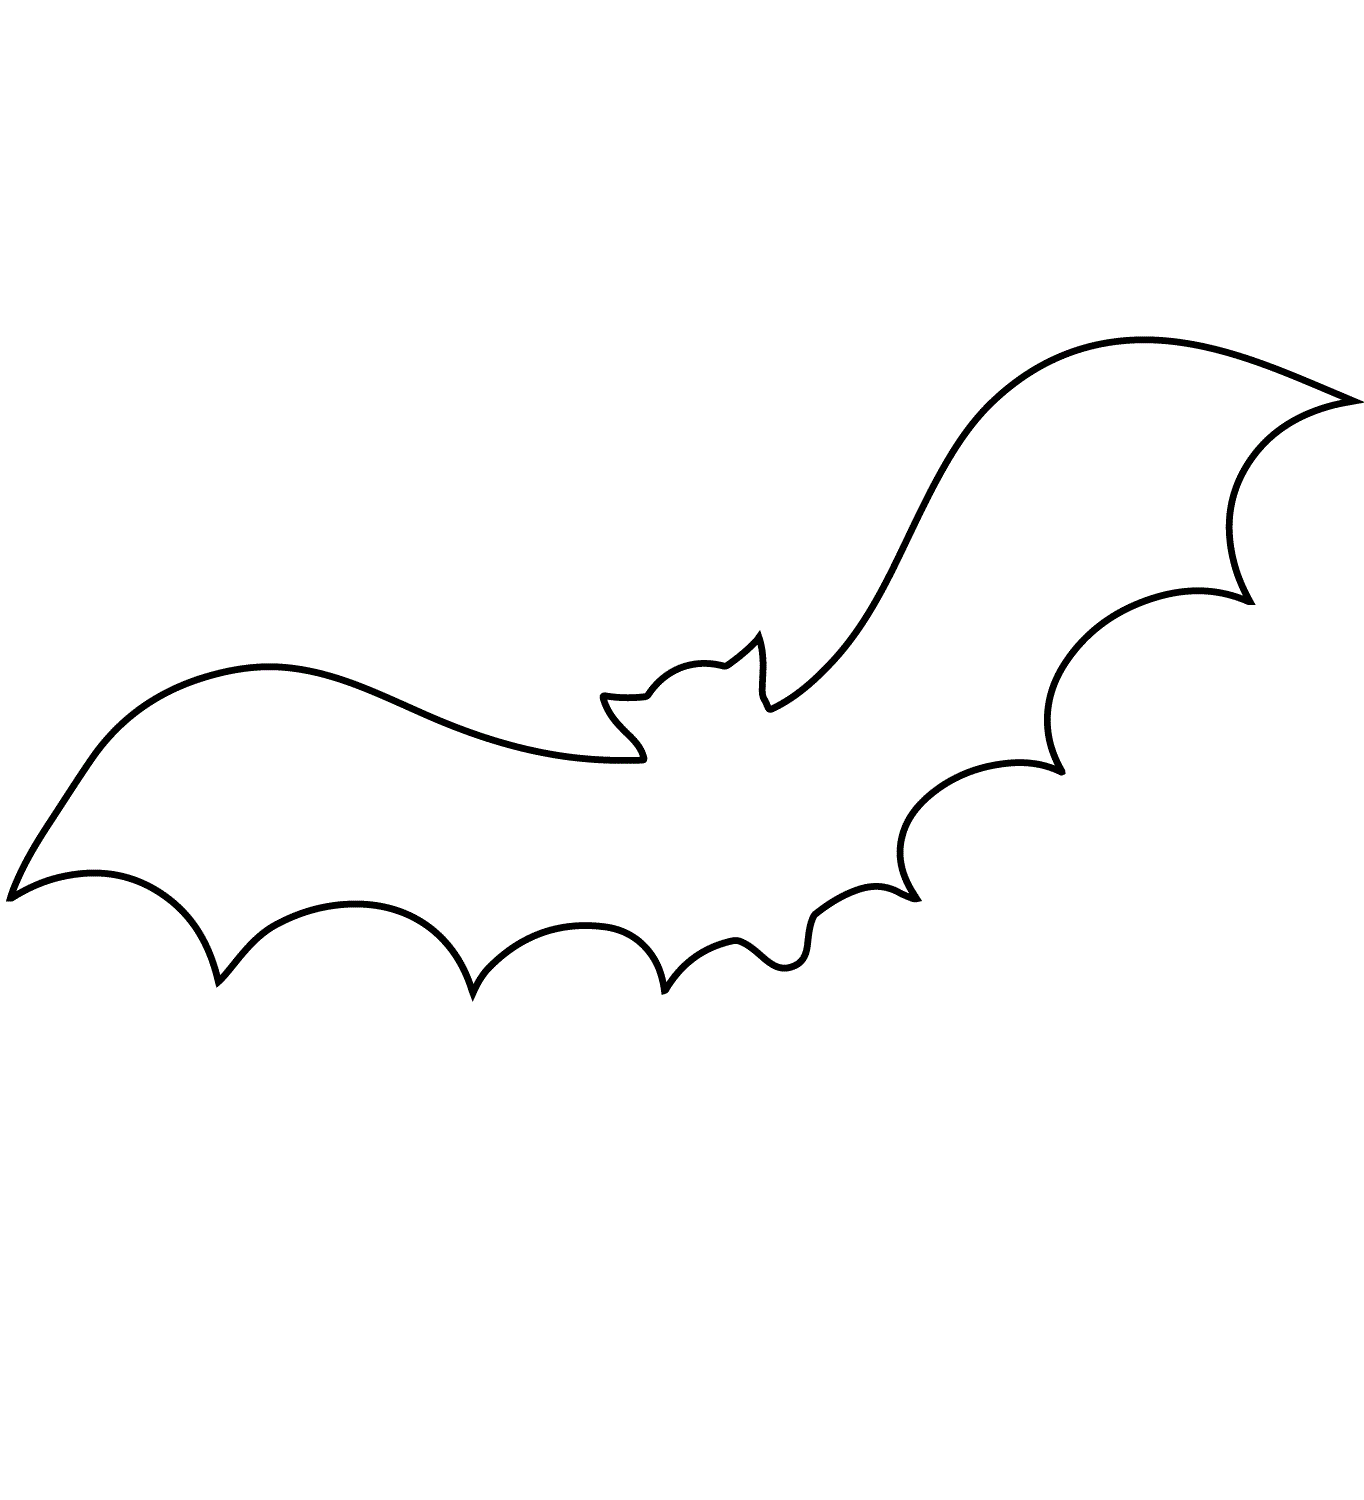 Draw Bat Image